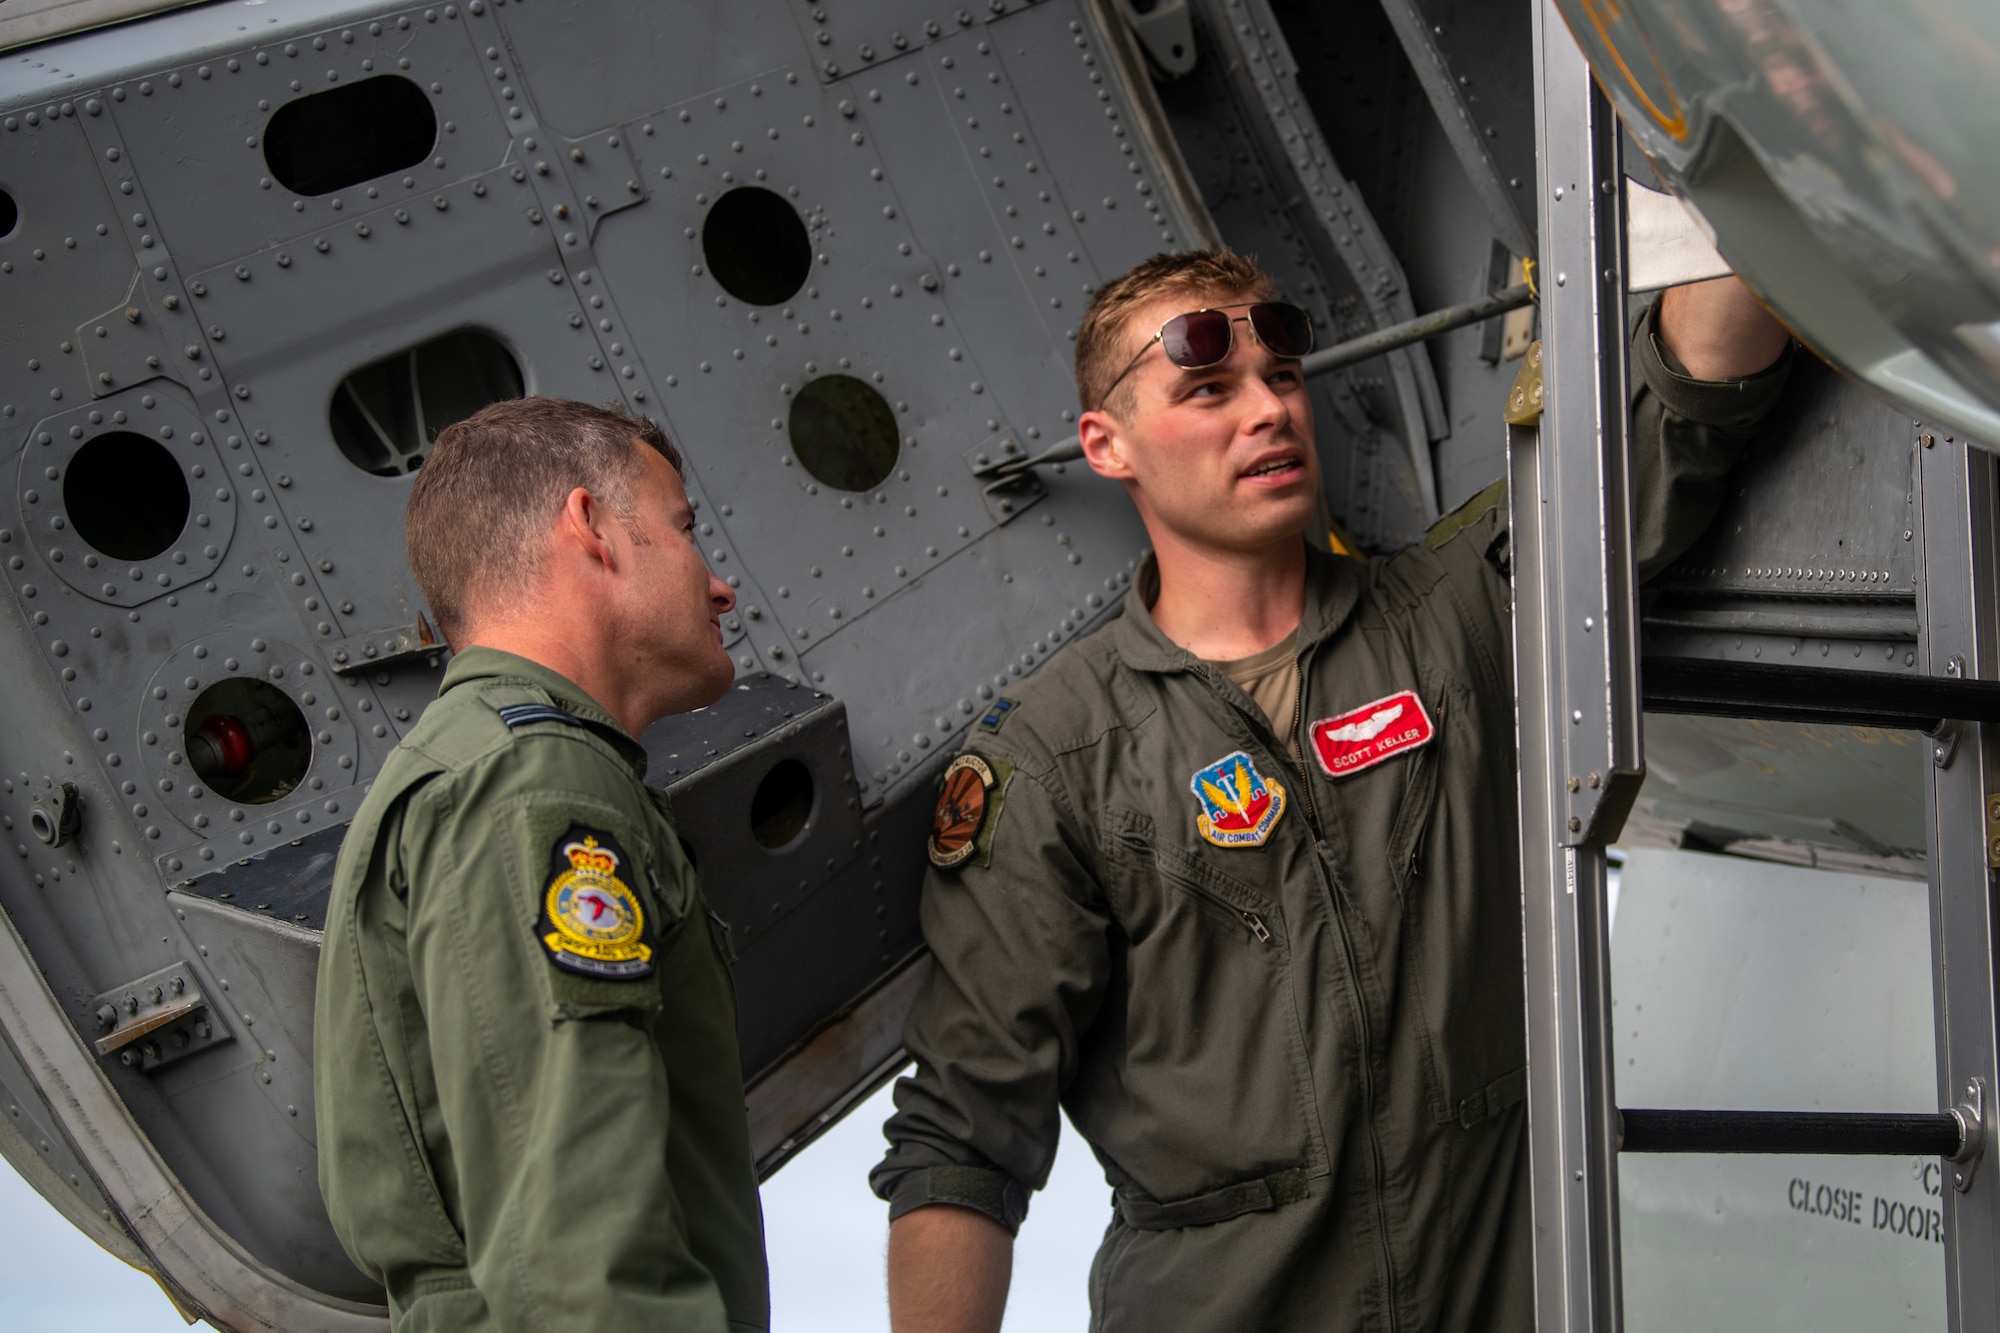 U.S. Air Force Capt. Keller conducting pre-flight checks with Flt. Lt. Van Vreden